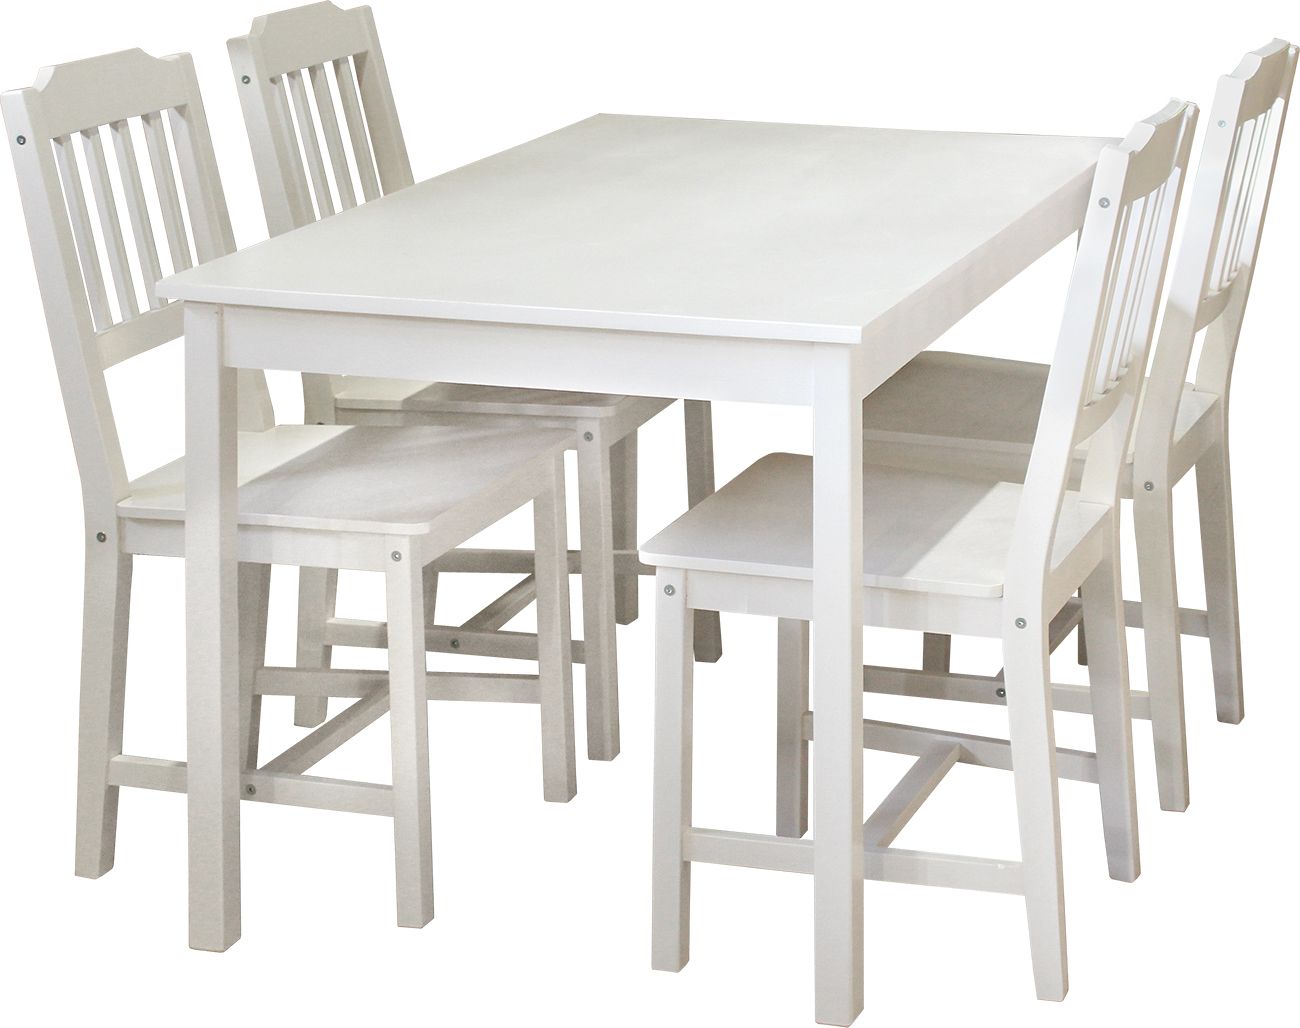 Stůl + 4 židle 8849 bílý lak Mdum - M DUM.cz